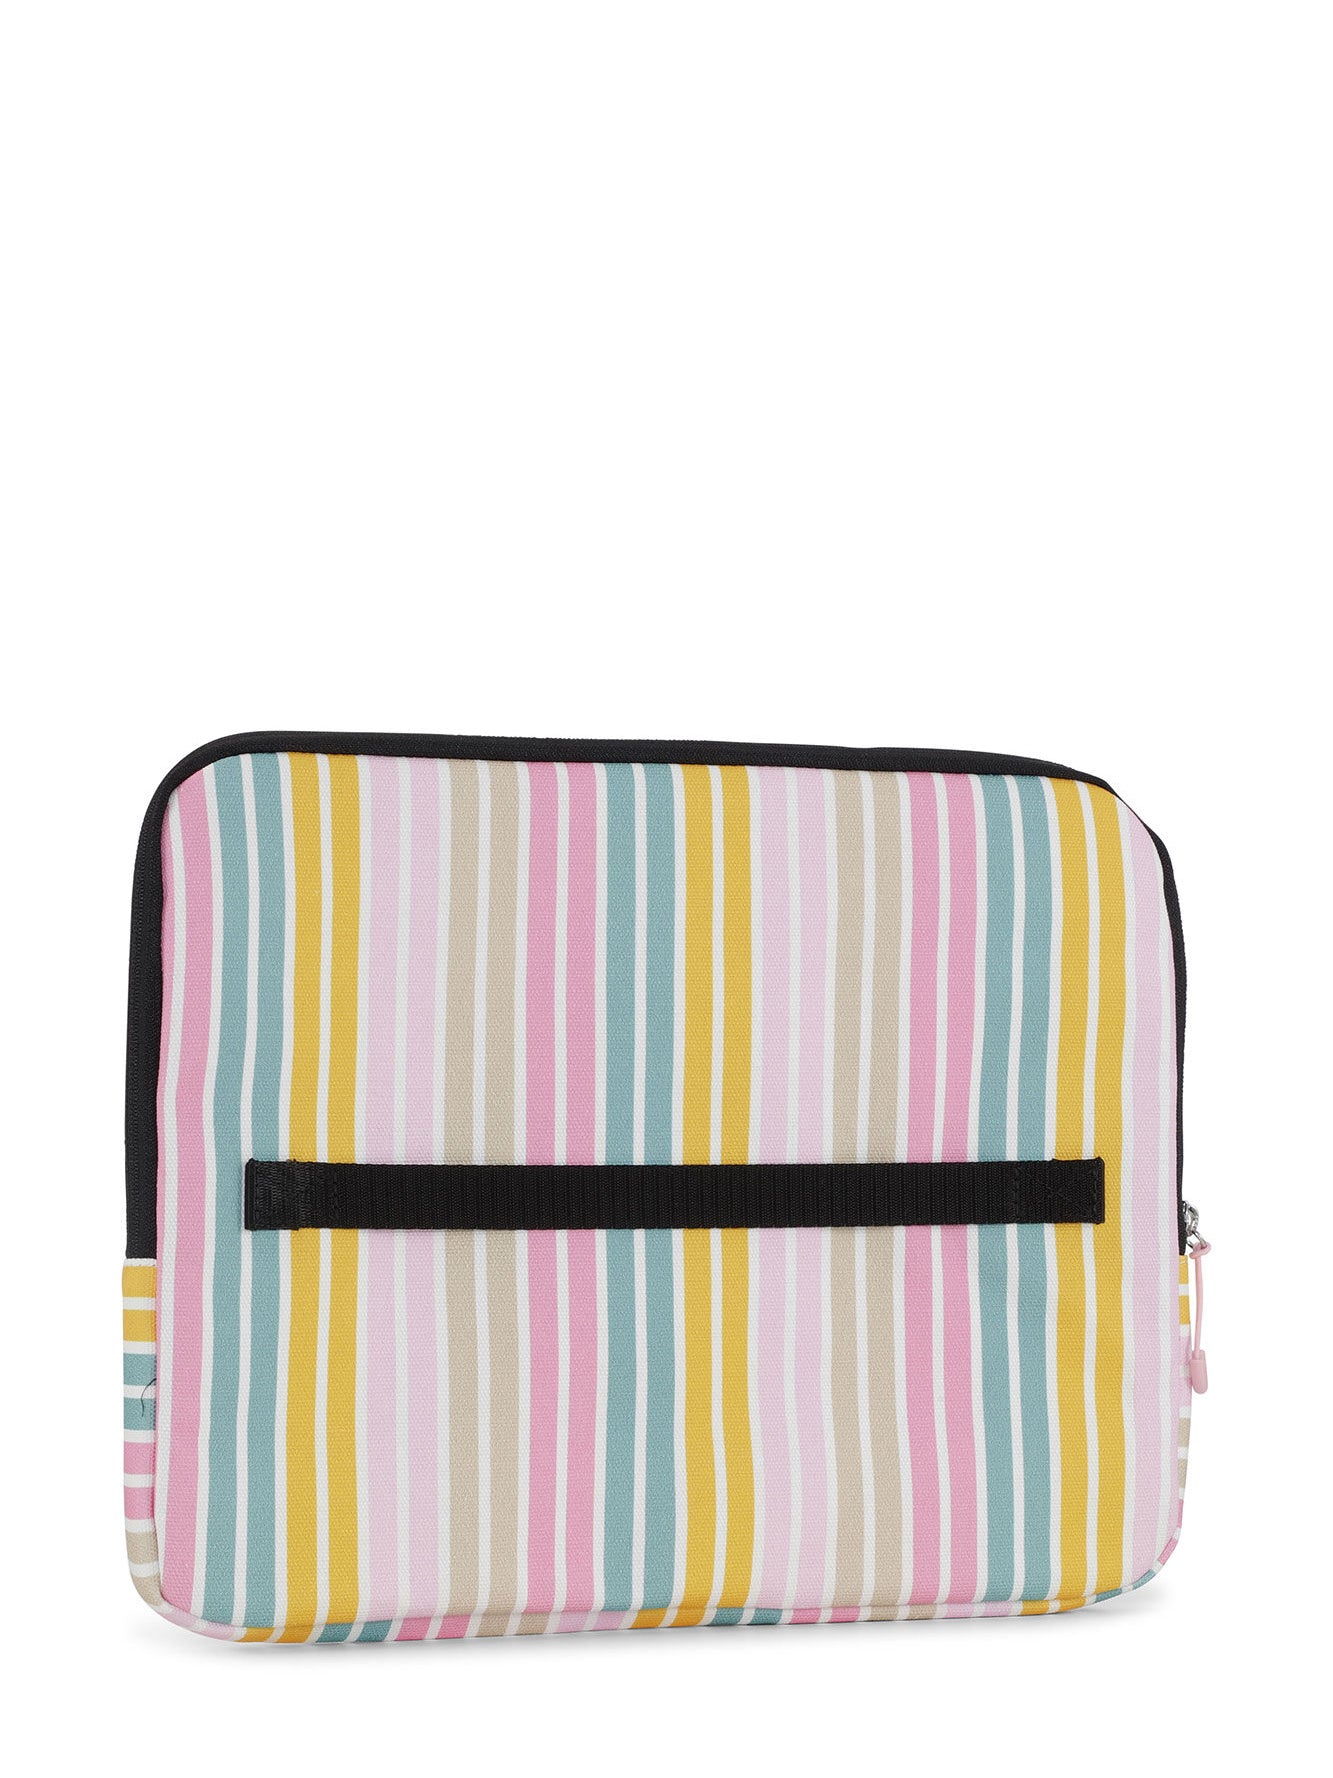 GANNI: Laptop sleeve. Recycled cotton. Multicolour stripes. My o My - Helsinki.